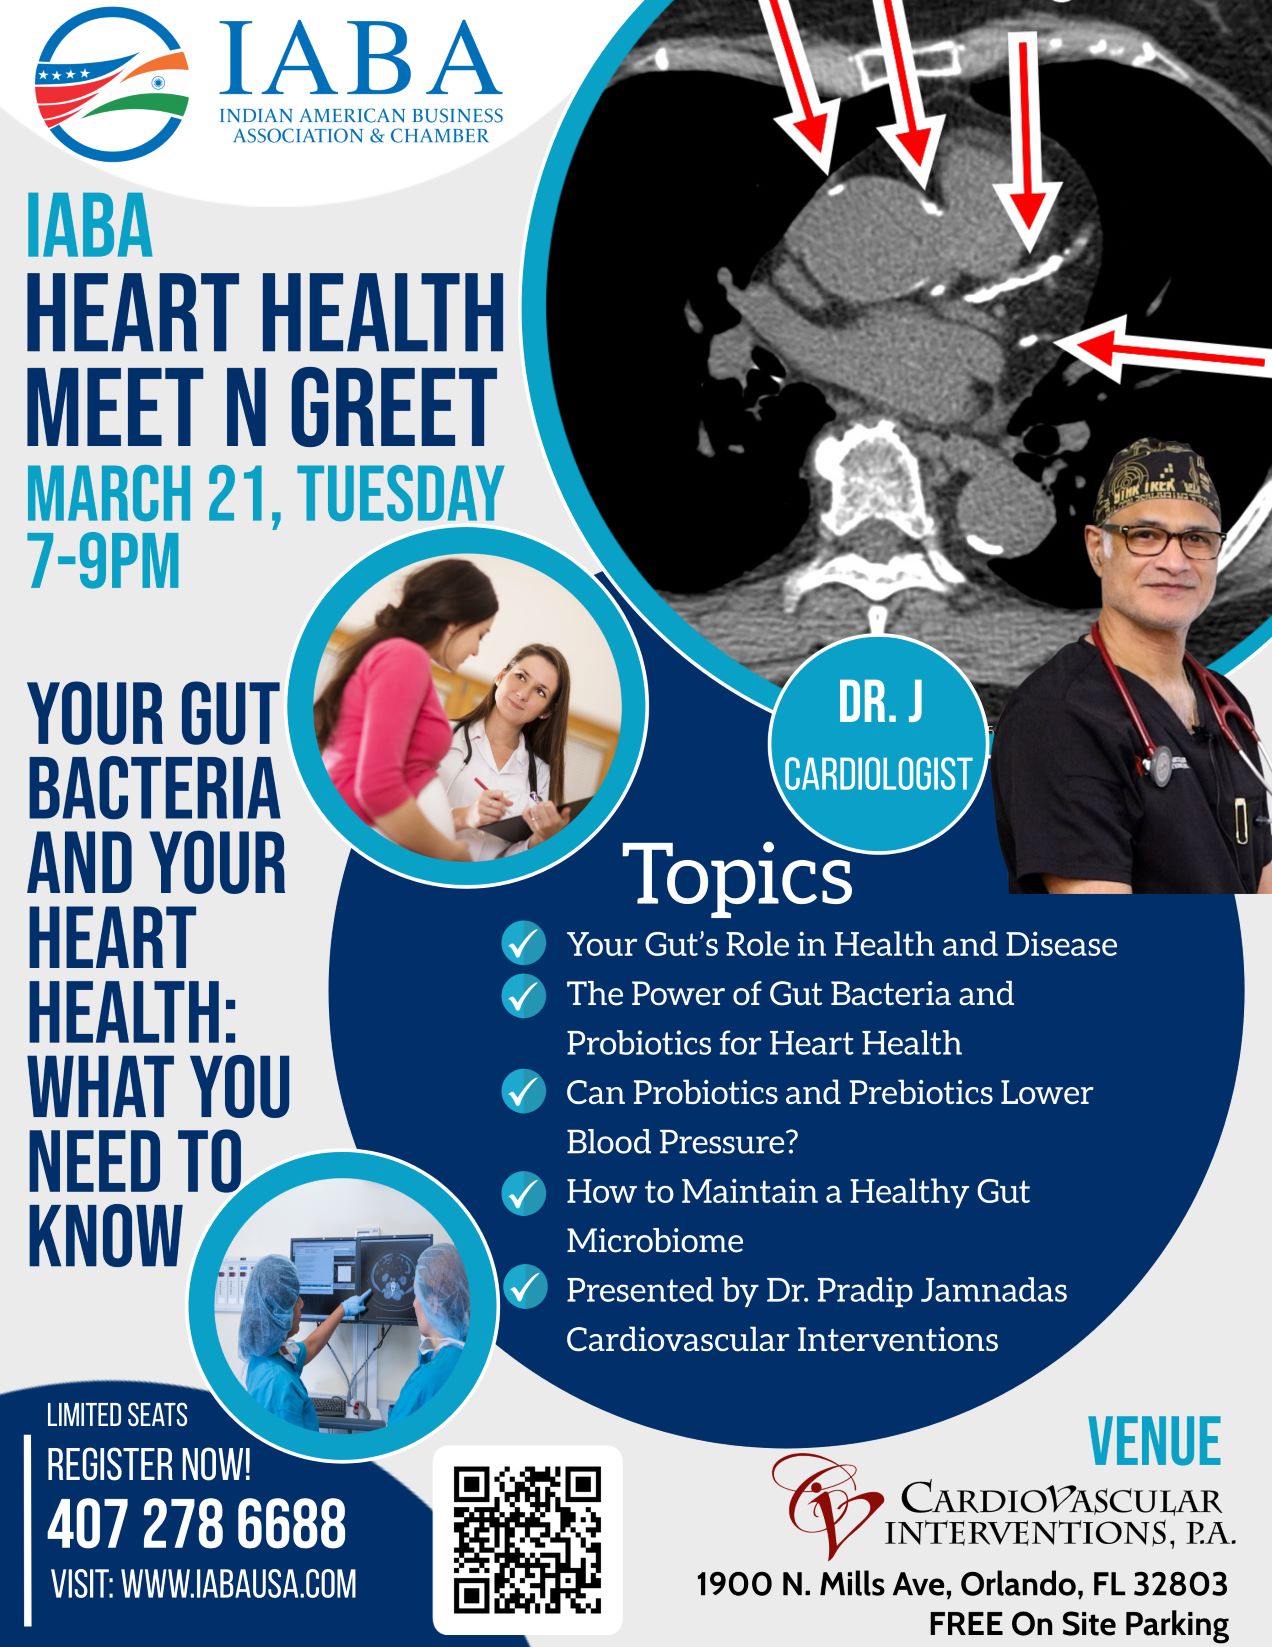 IABA Heart Health Session & Meet N Greet With Dr. Pradip Jamnadas (Cardiologist)- March 21st Tuesday